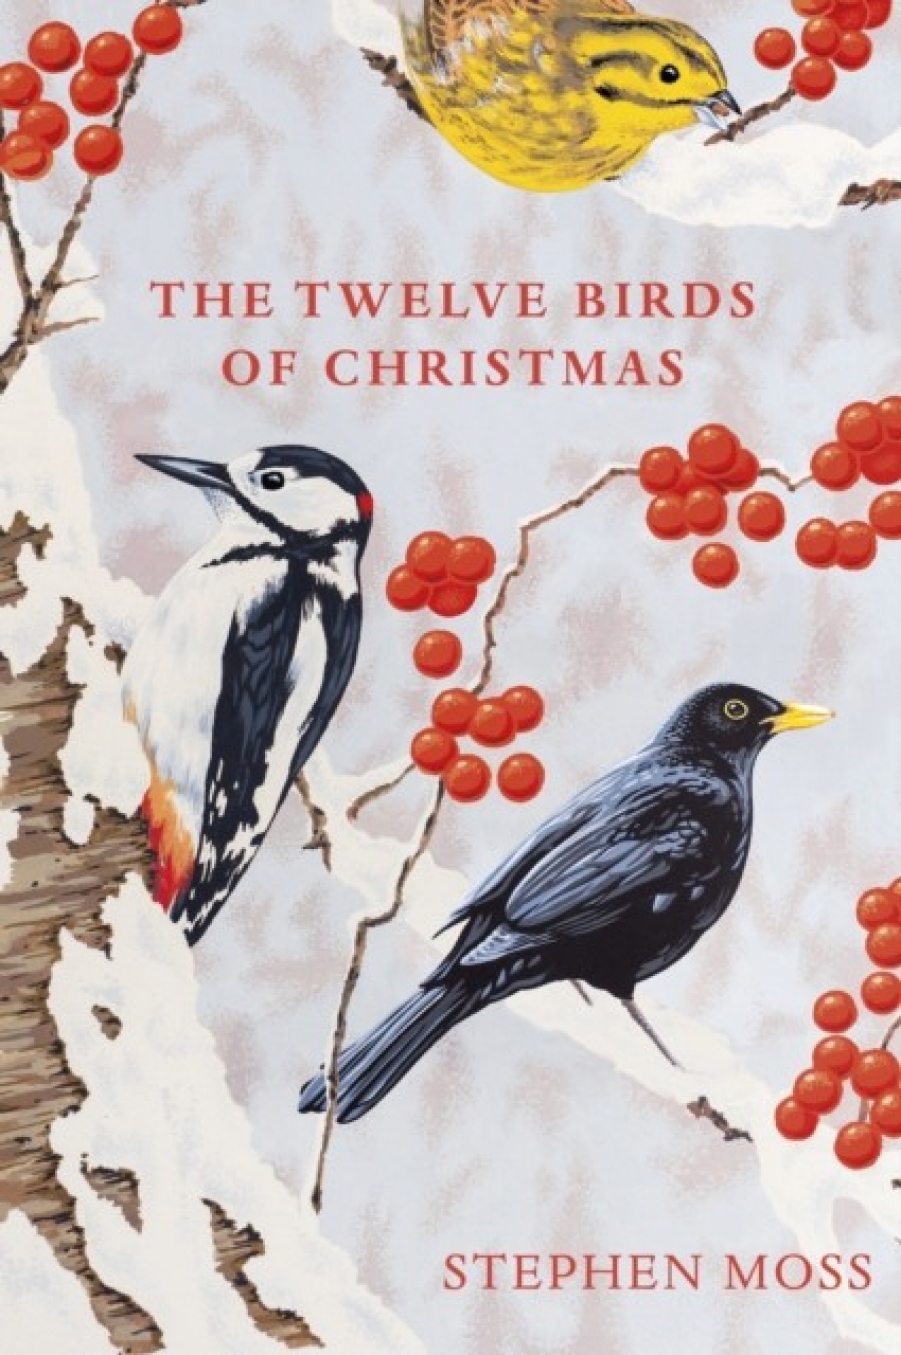 Moss Stephen Twelve Birds of Christmas 